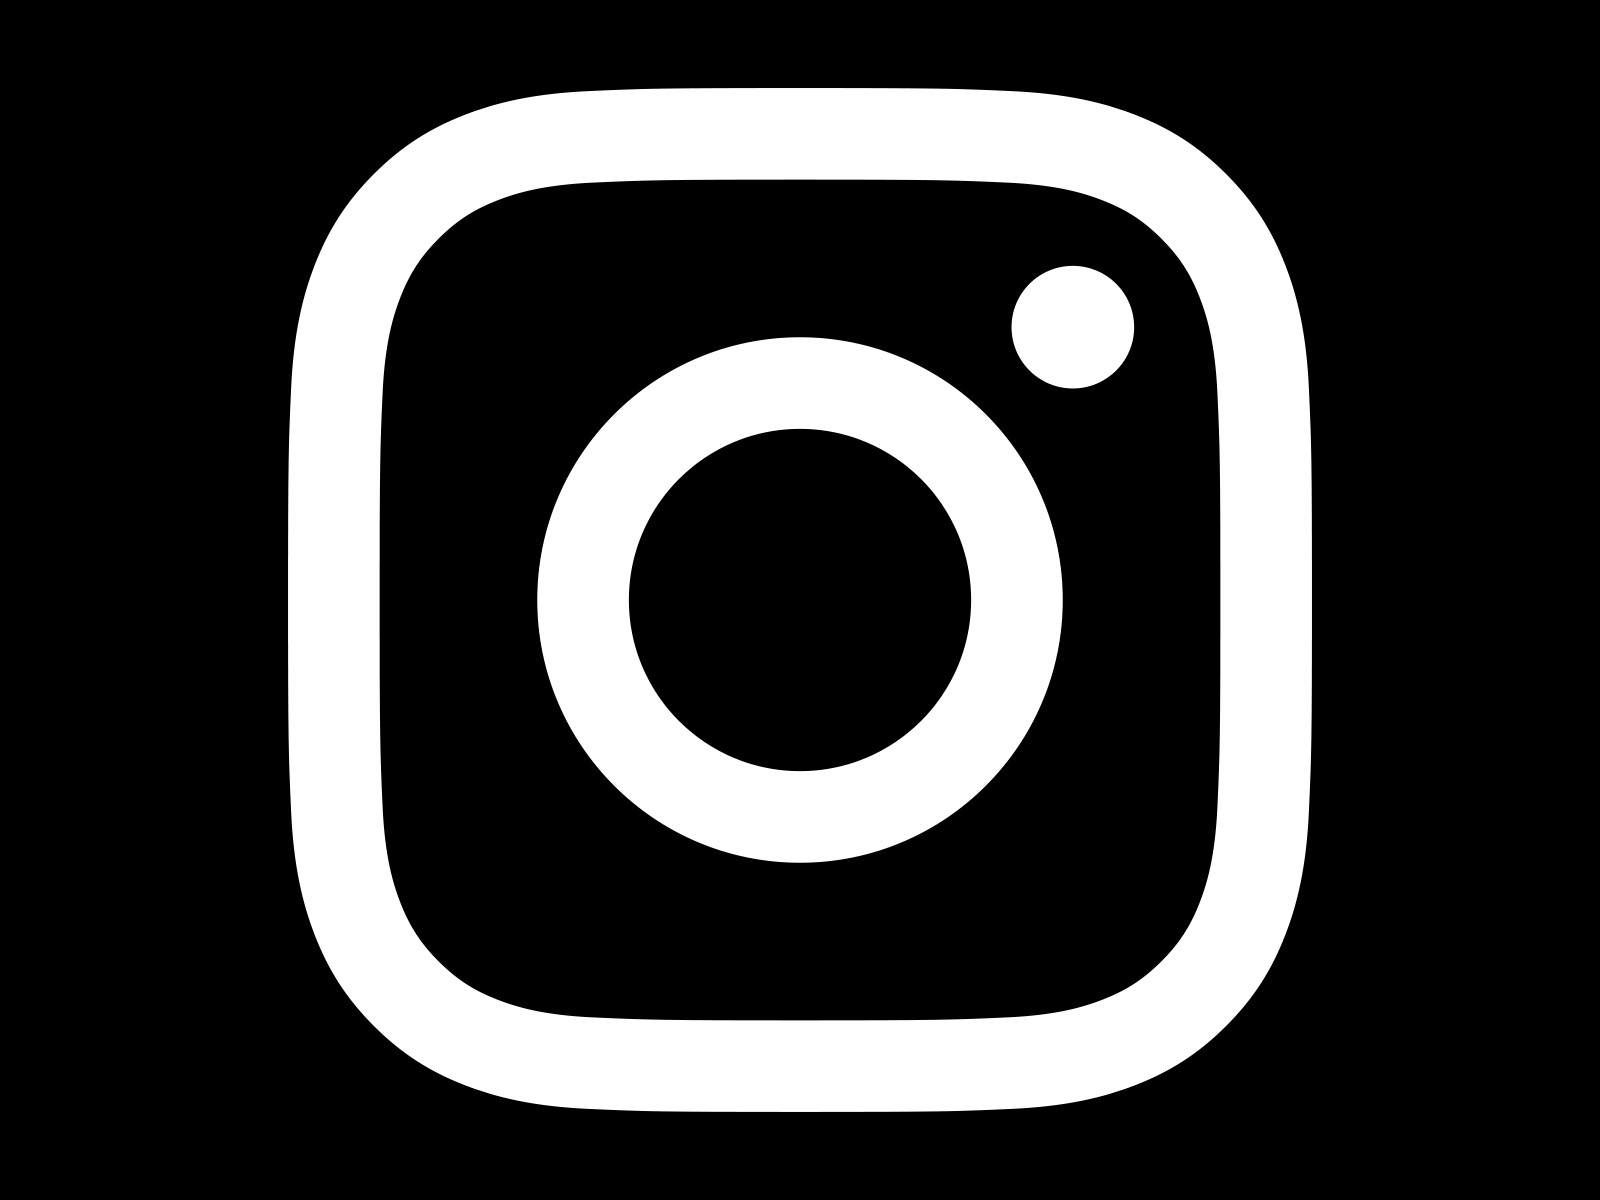 White and Black Logo - Instagram Logo PNG Transparent & SVG Vector - Freebie Supply